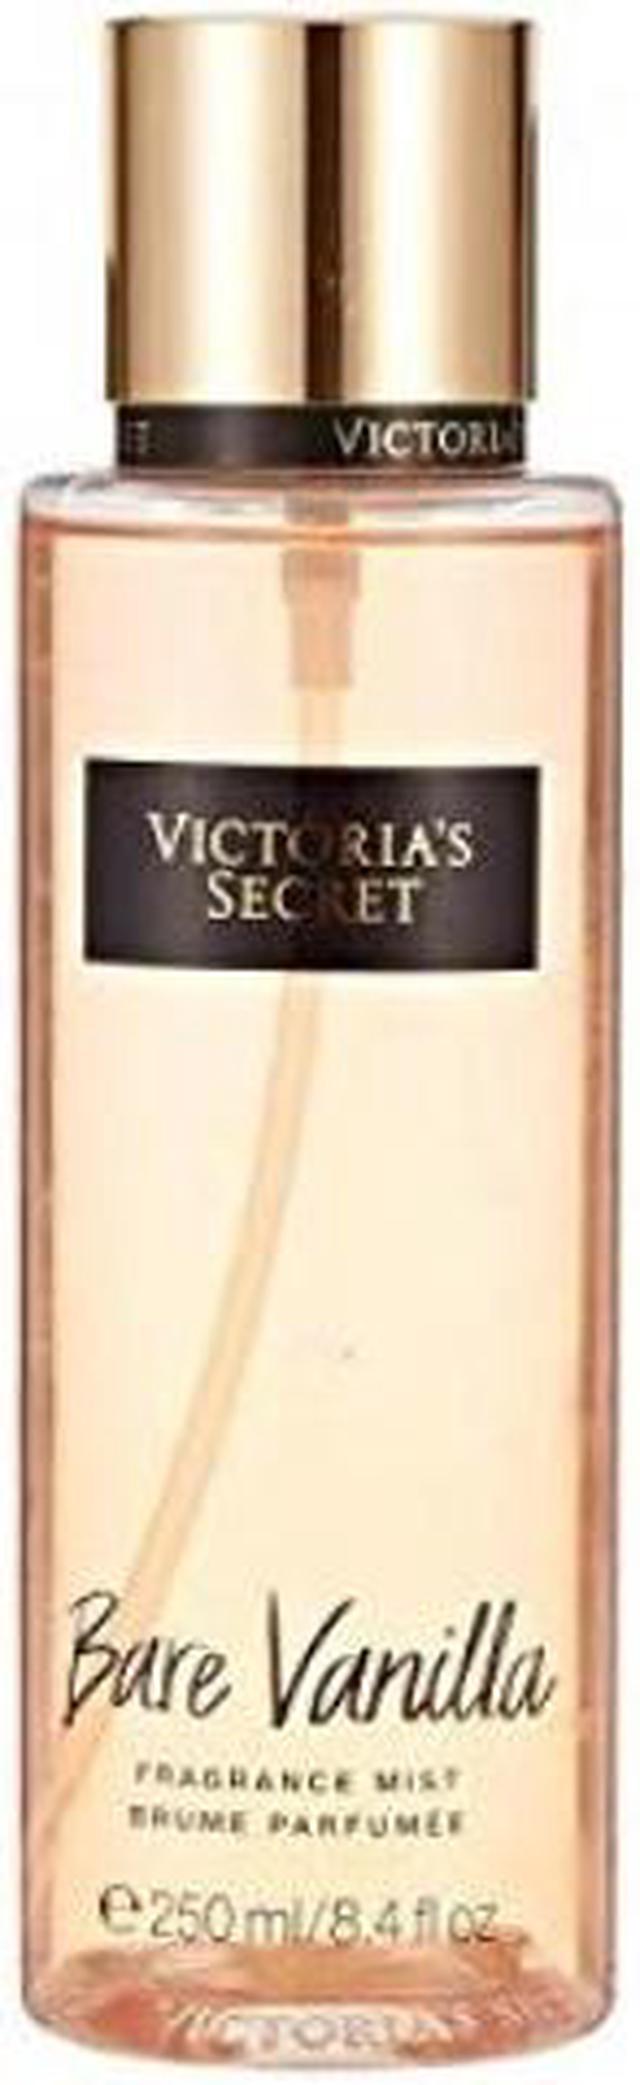 Victoria's Secret Bare Vanilla Fragrance Mist, 8.4 oz 